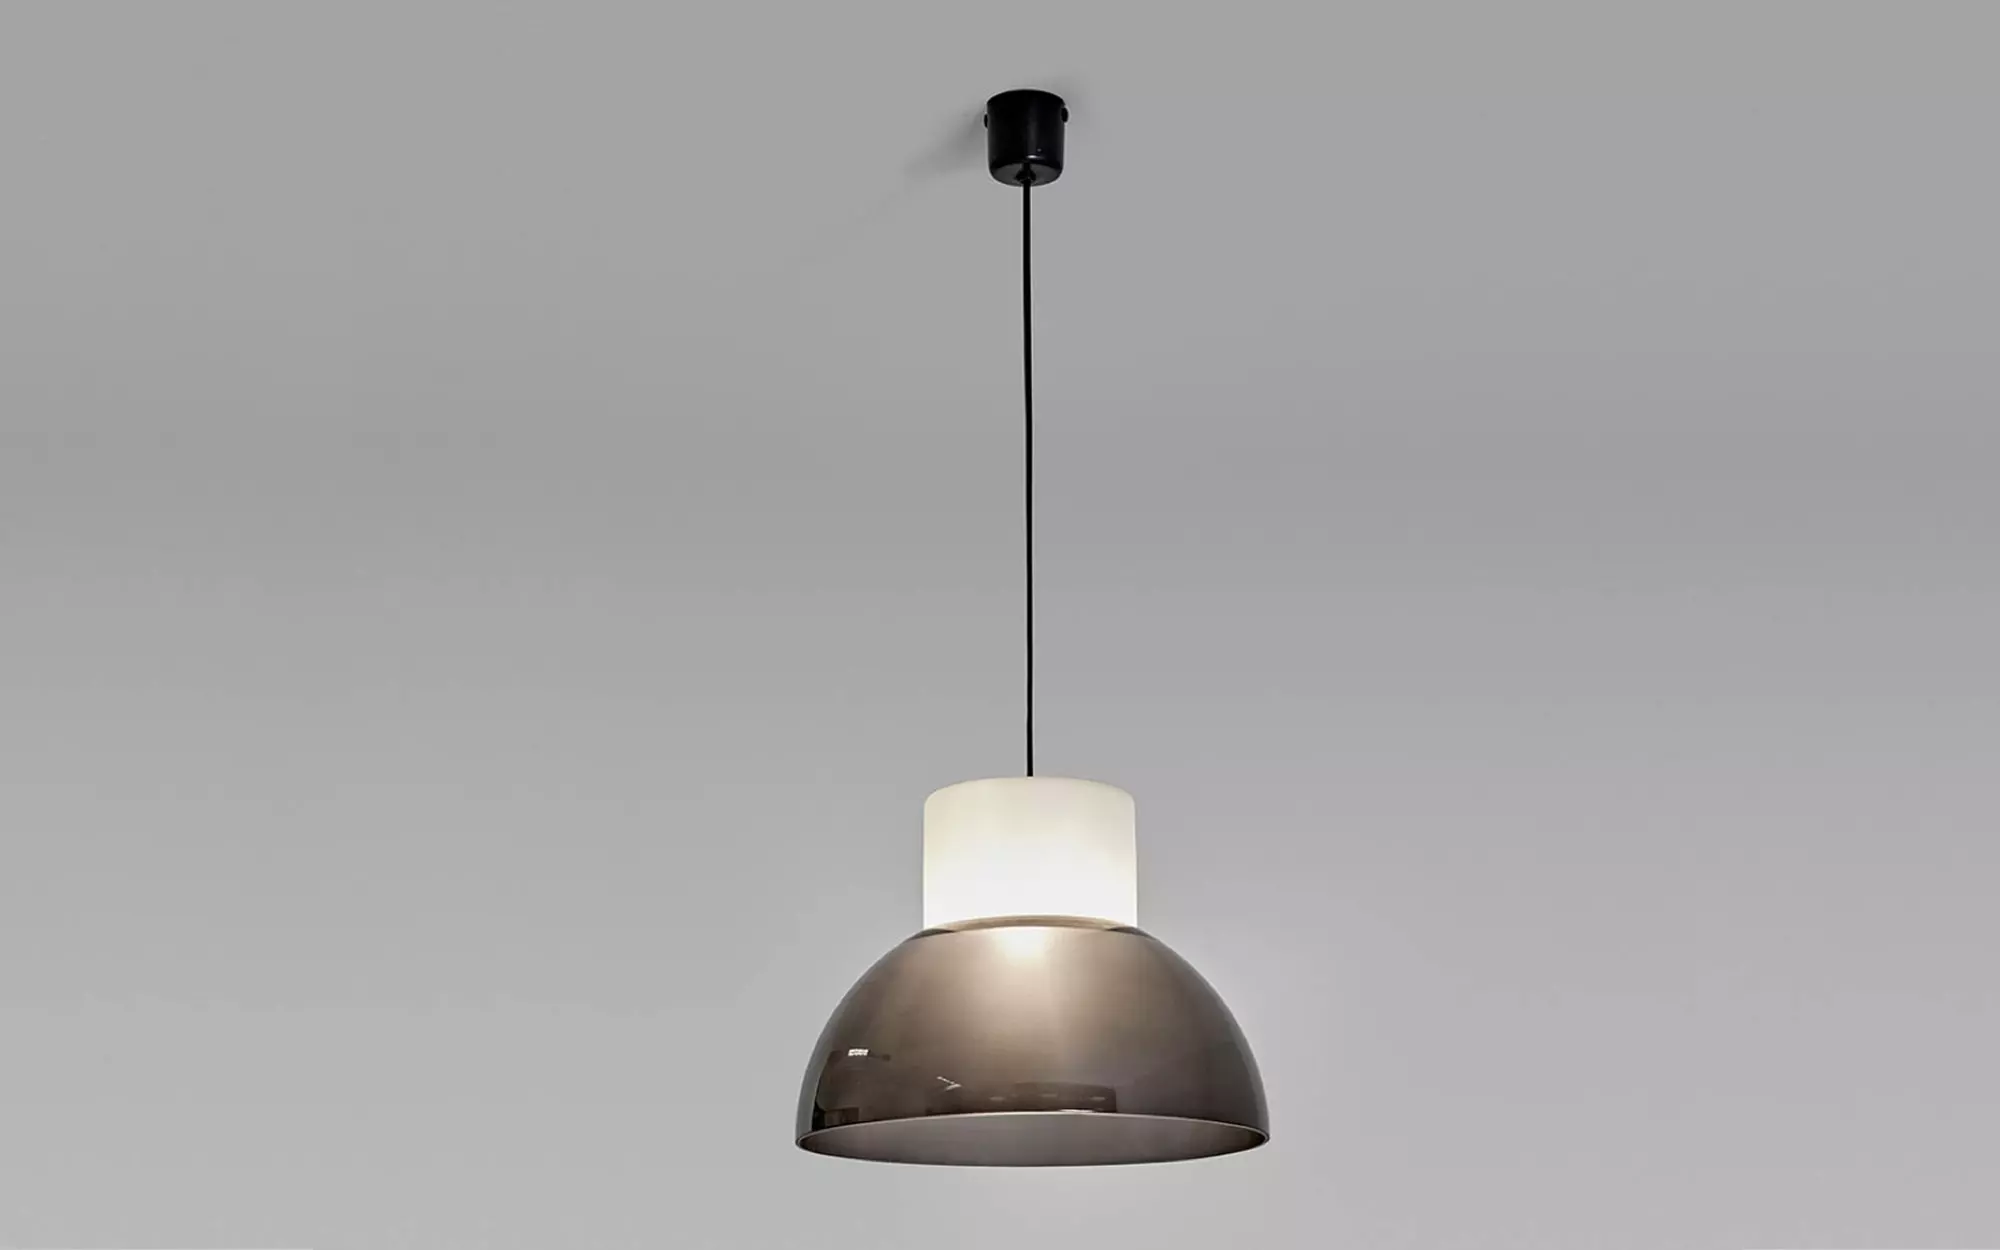 2103 (grey) - Gino Sarfatti - Ceiling light - Galerie kreo